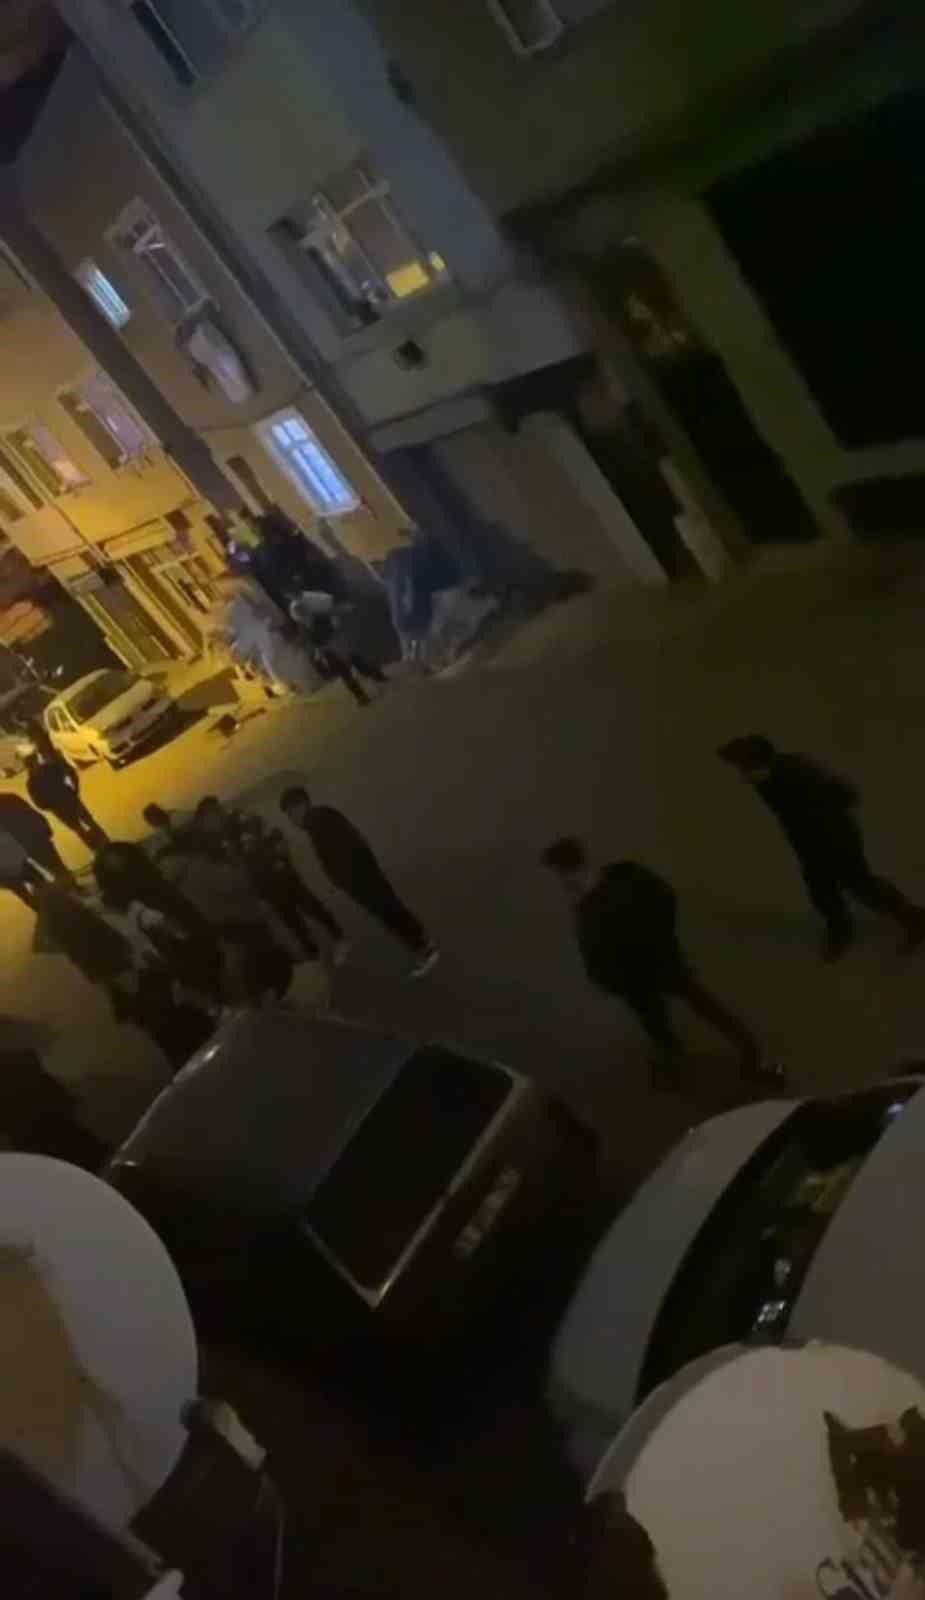 sislide akrabalarin meydan kavgasi kamerada ortalik karisti polis havaya ates acti 3 Ojez75sQ